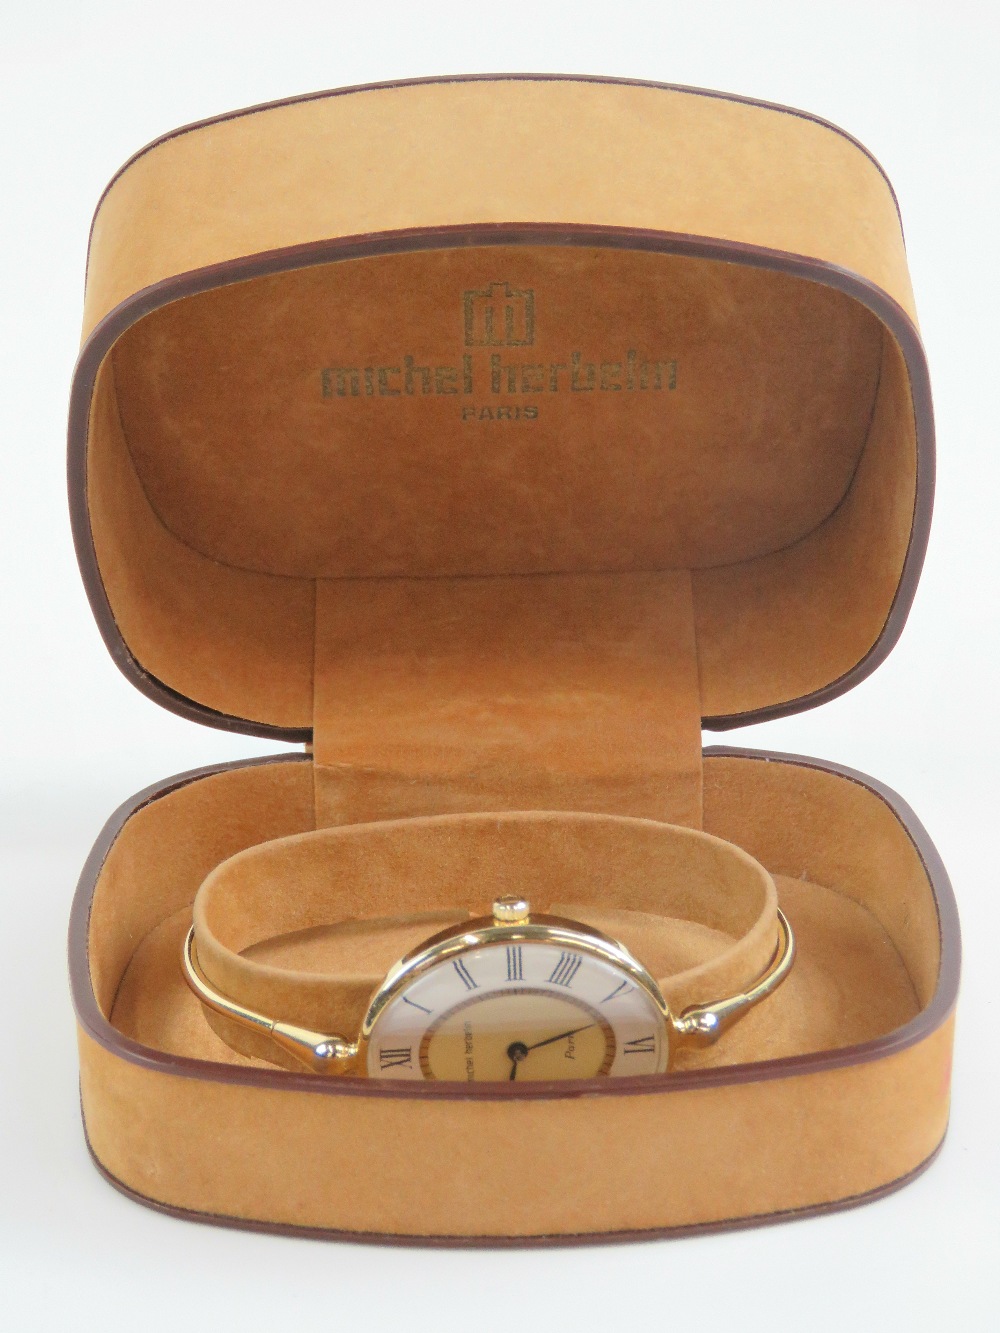 A Michael Herbeim ladies wristwatch in presentation box, - Image 3 of 3